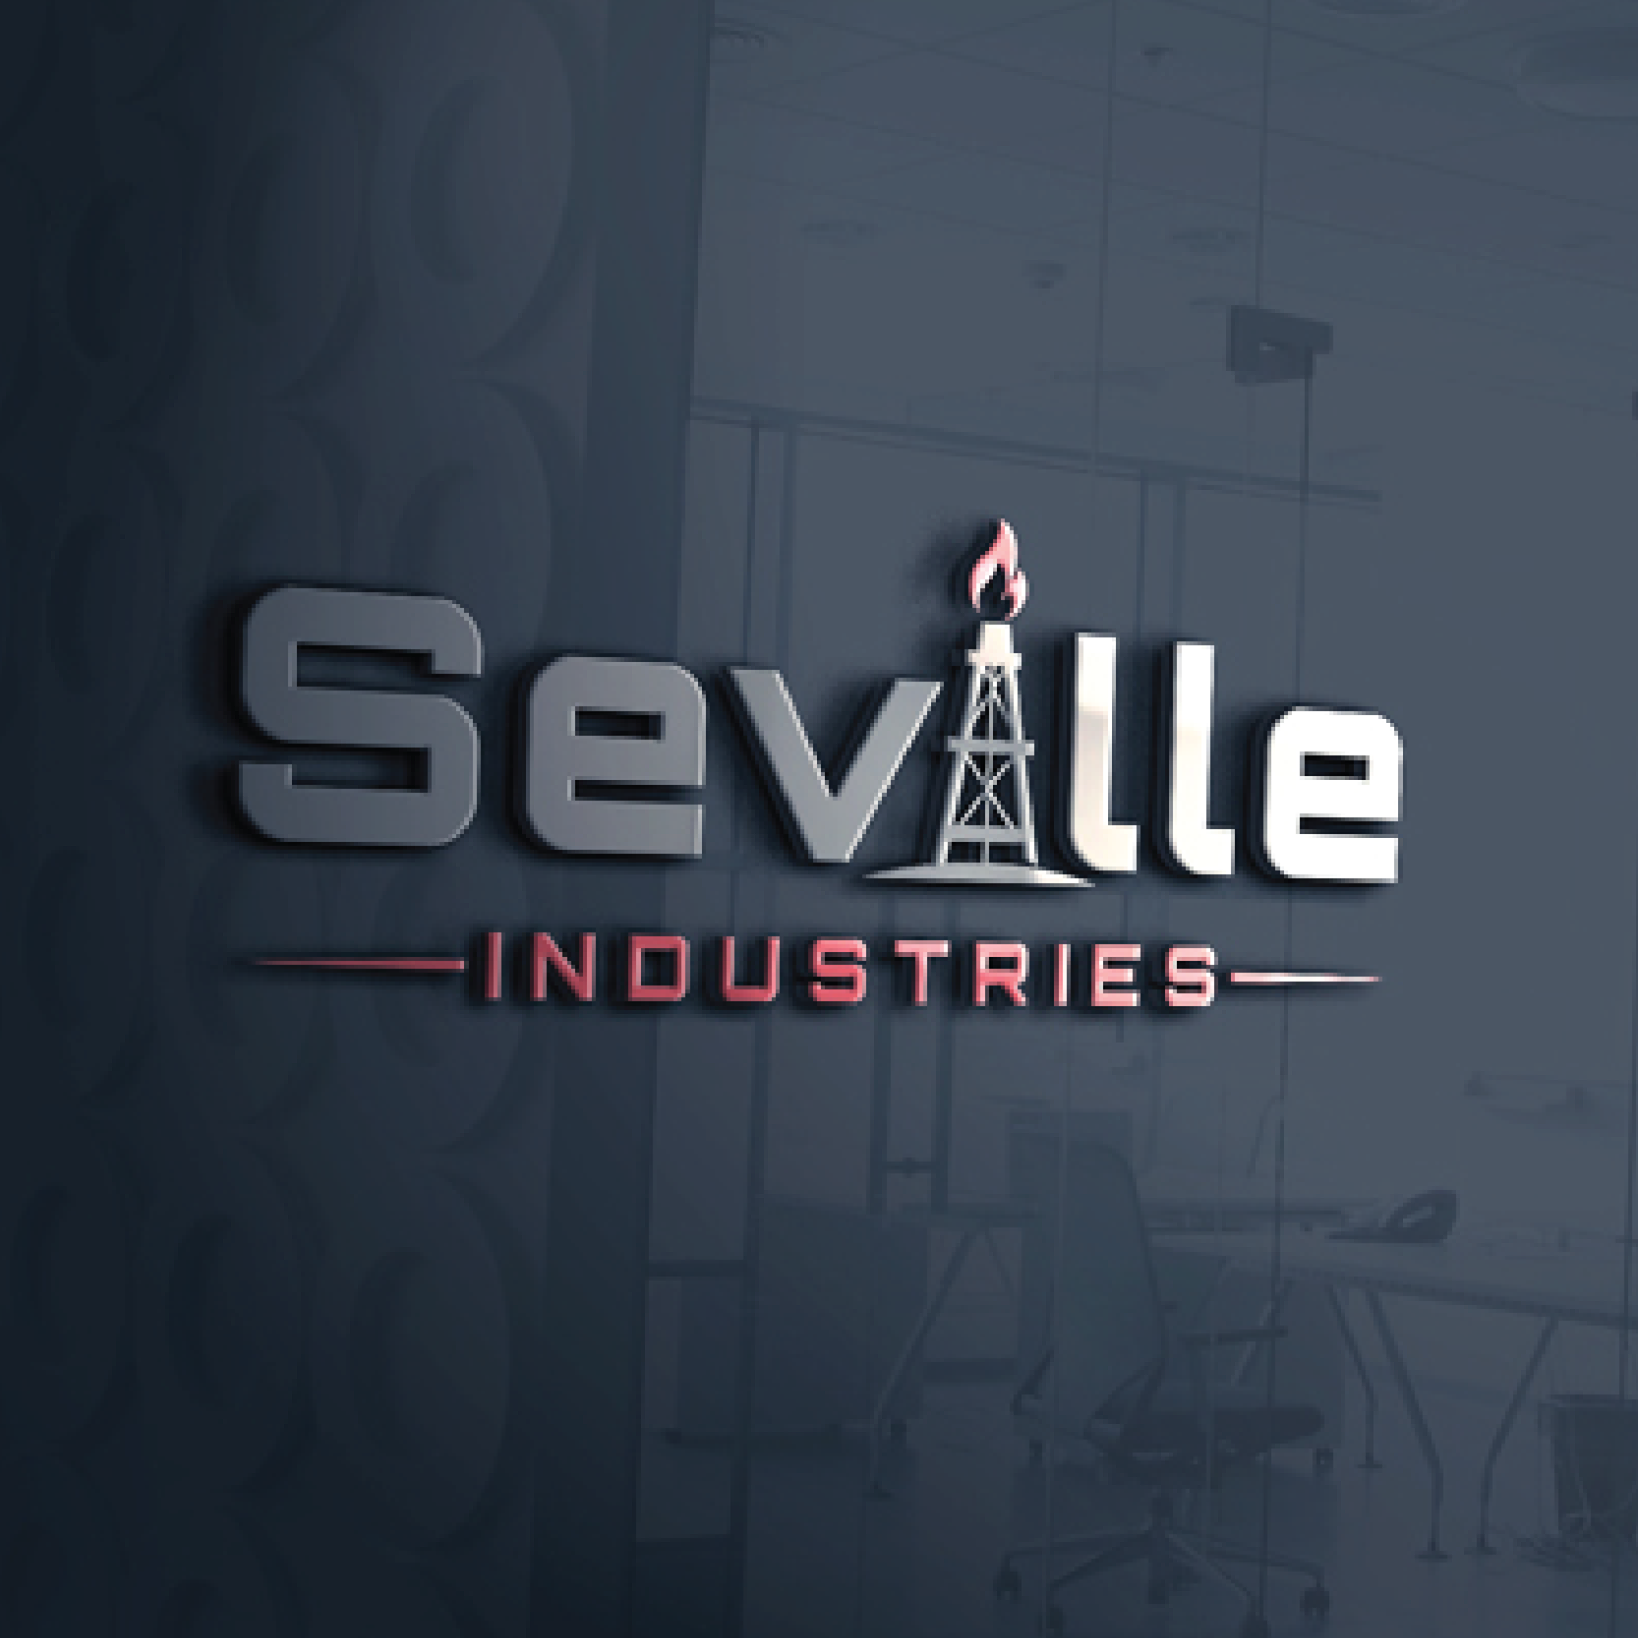 Seville Industries logo